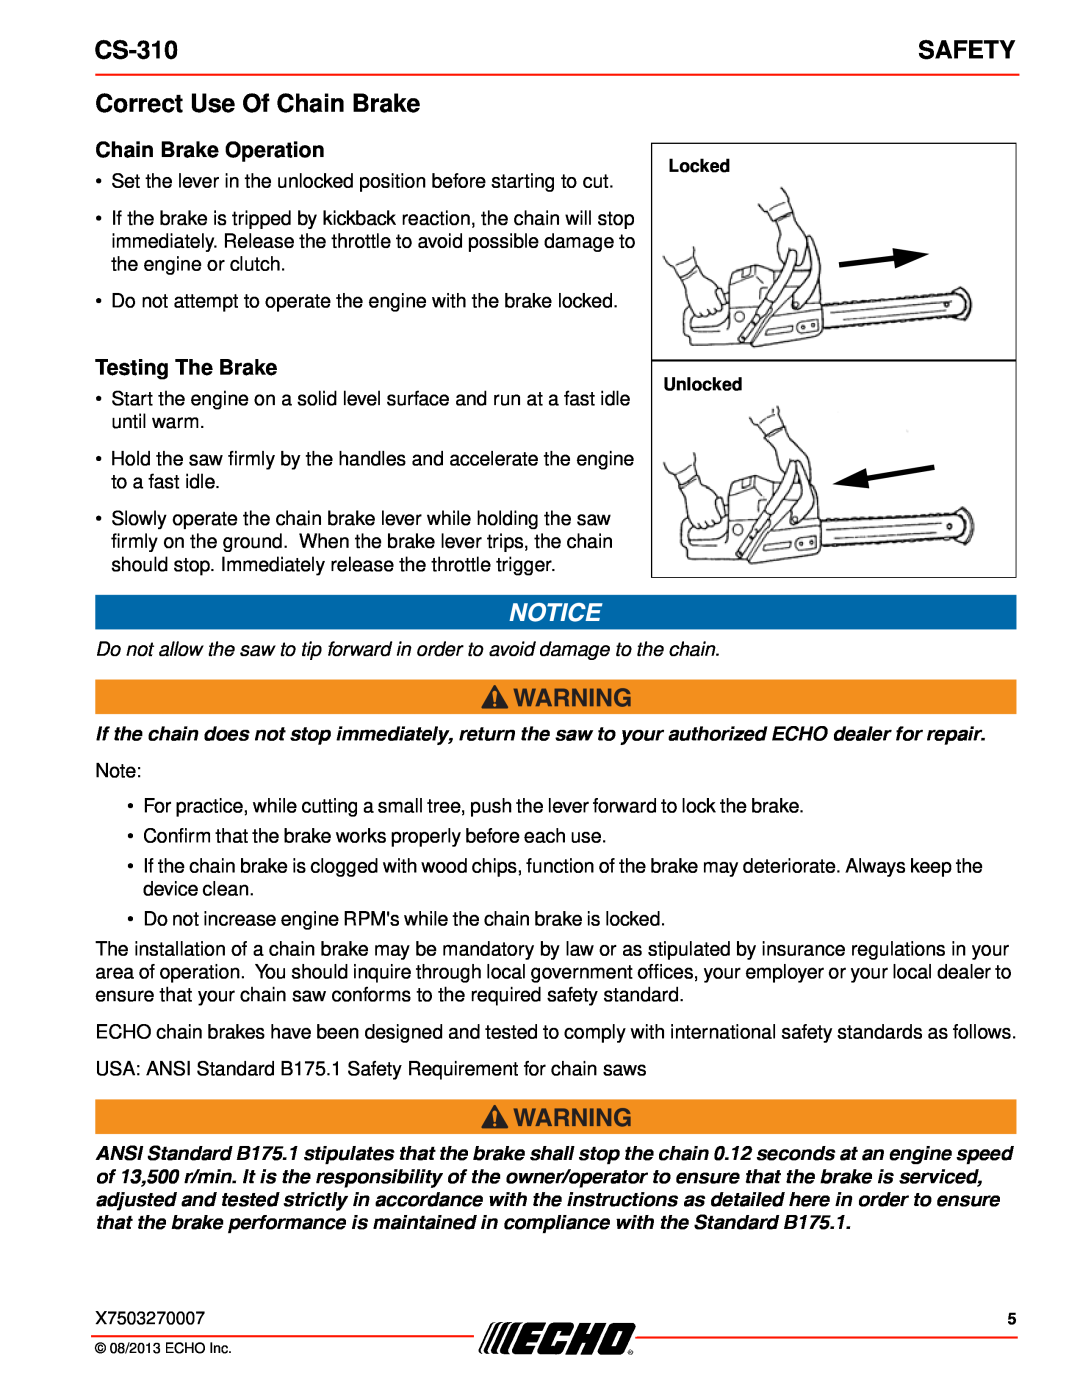 Echo CS-310 instruction manual Correct Use Of Chain Brake, Safety, Chain Brake Operation, Testing The Brake 